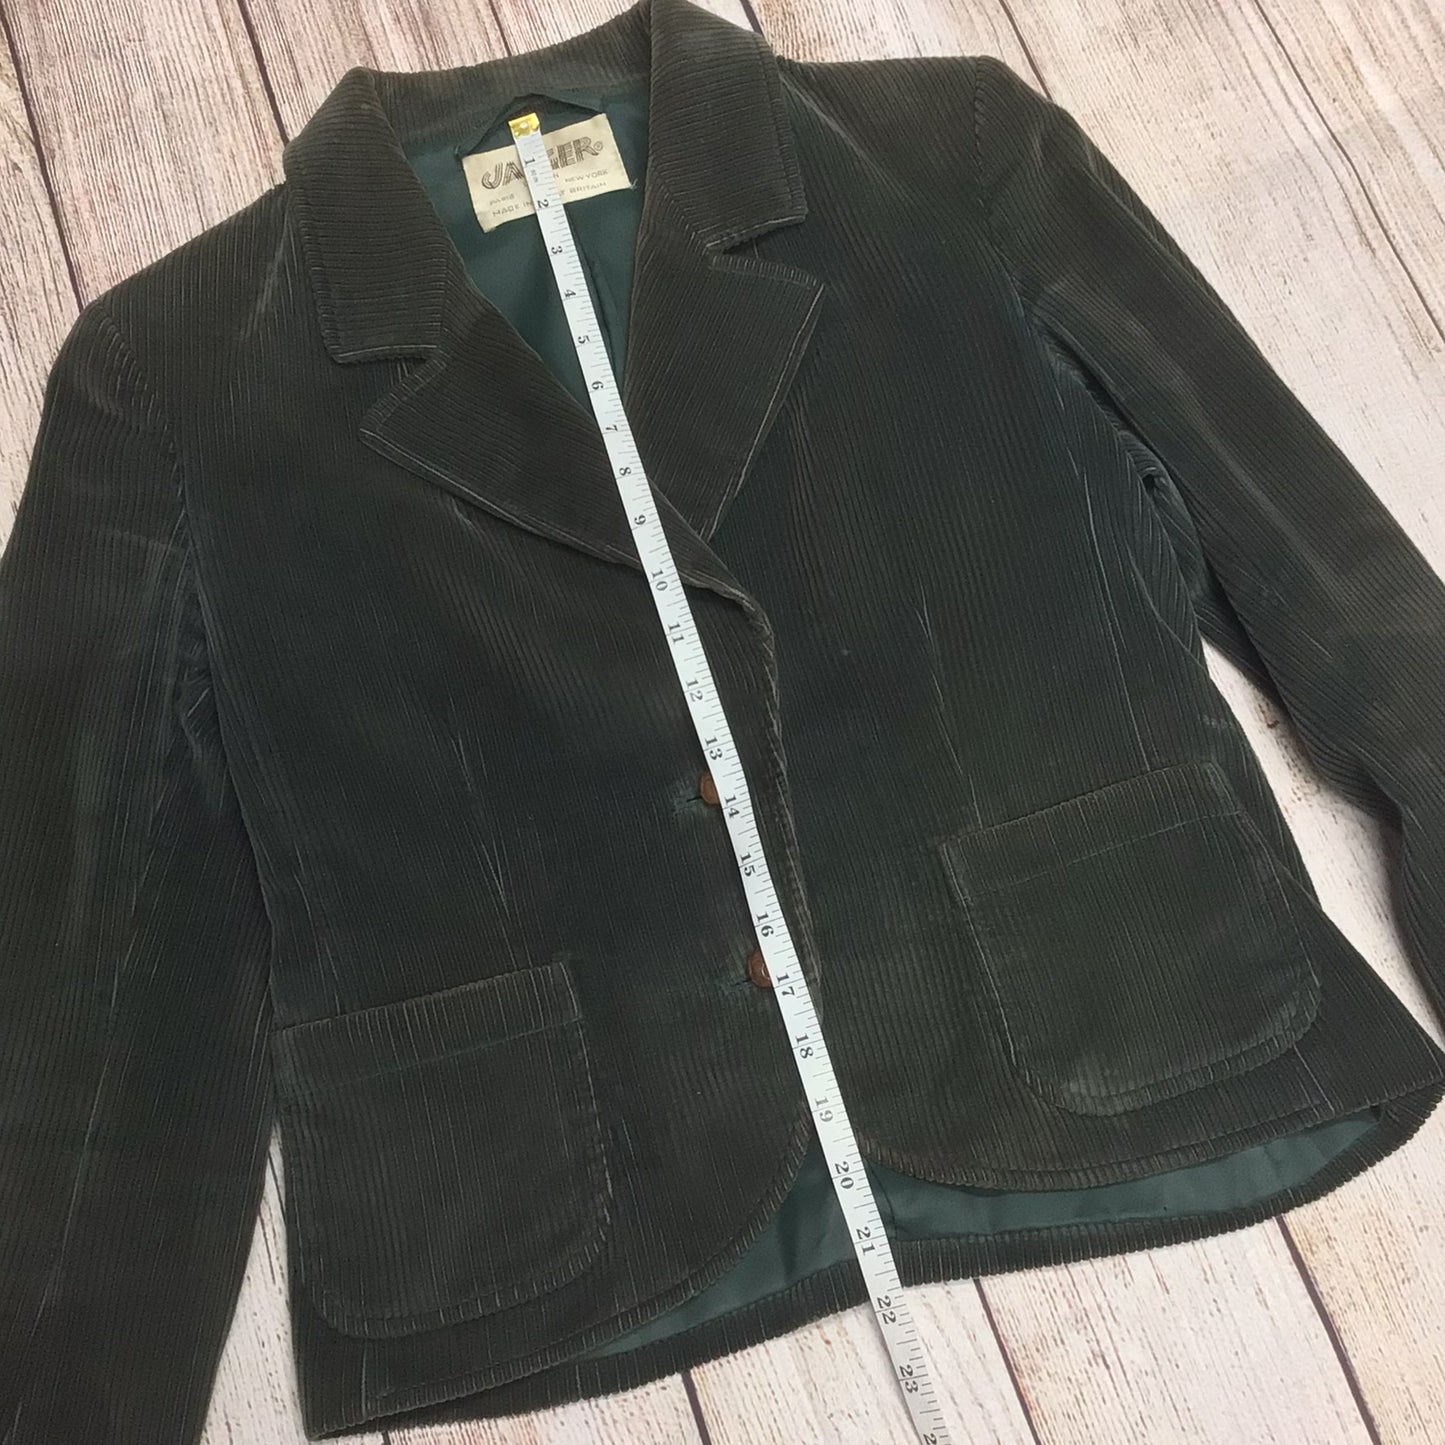 Jaeger Green Corduroy Blazer Jacket 88% Cotton Size 10